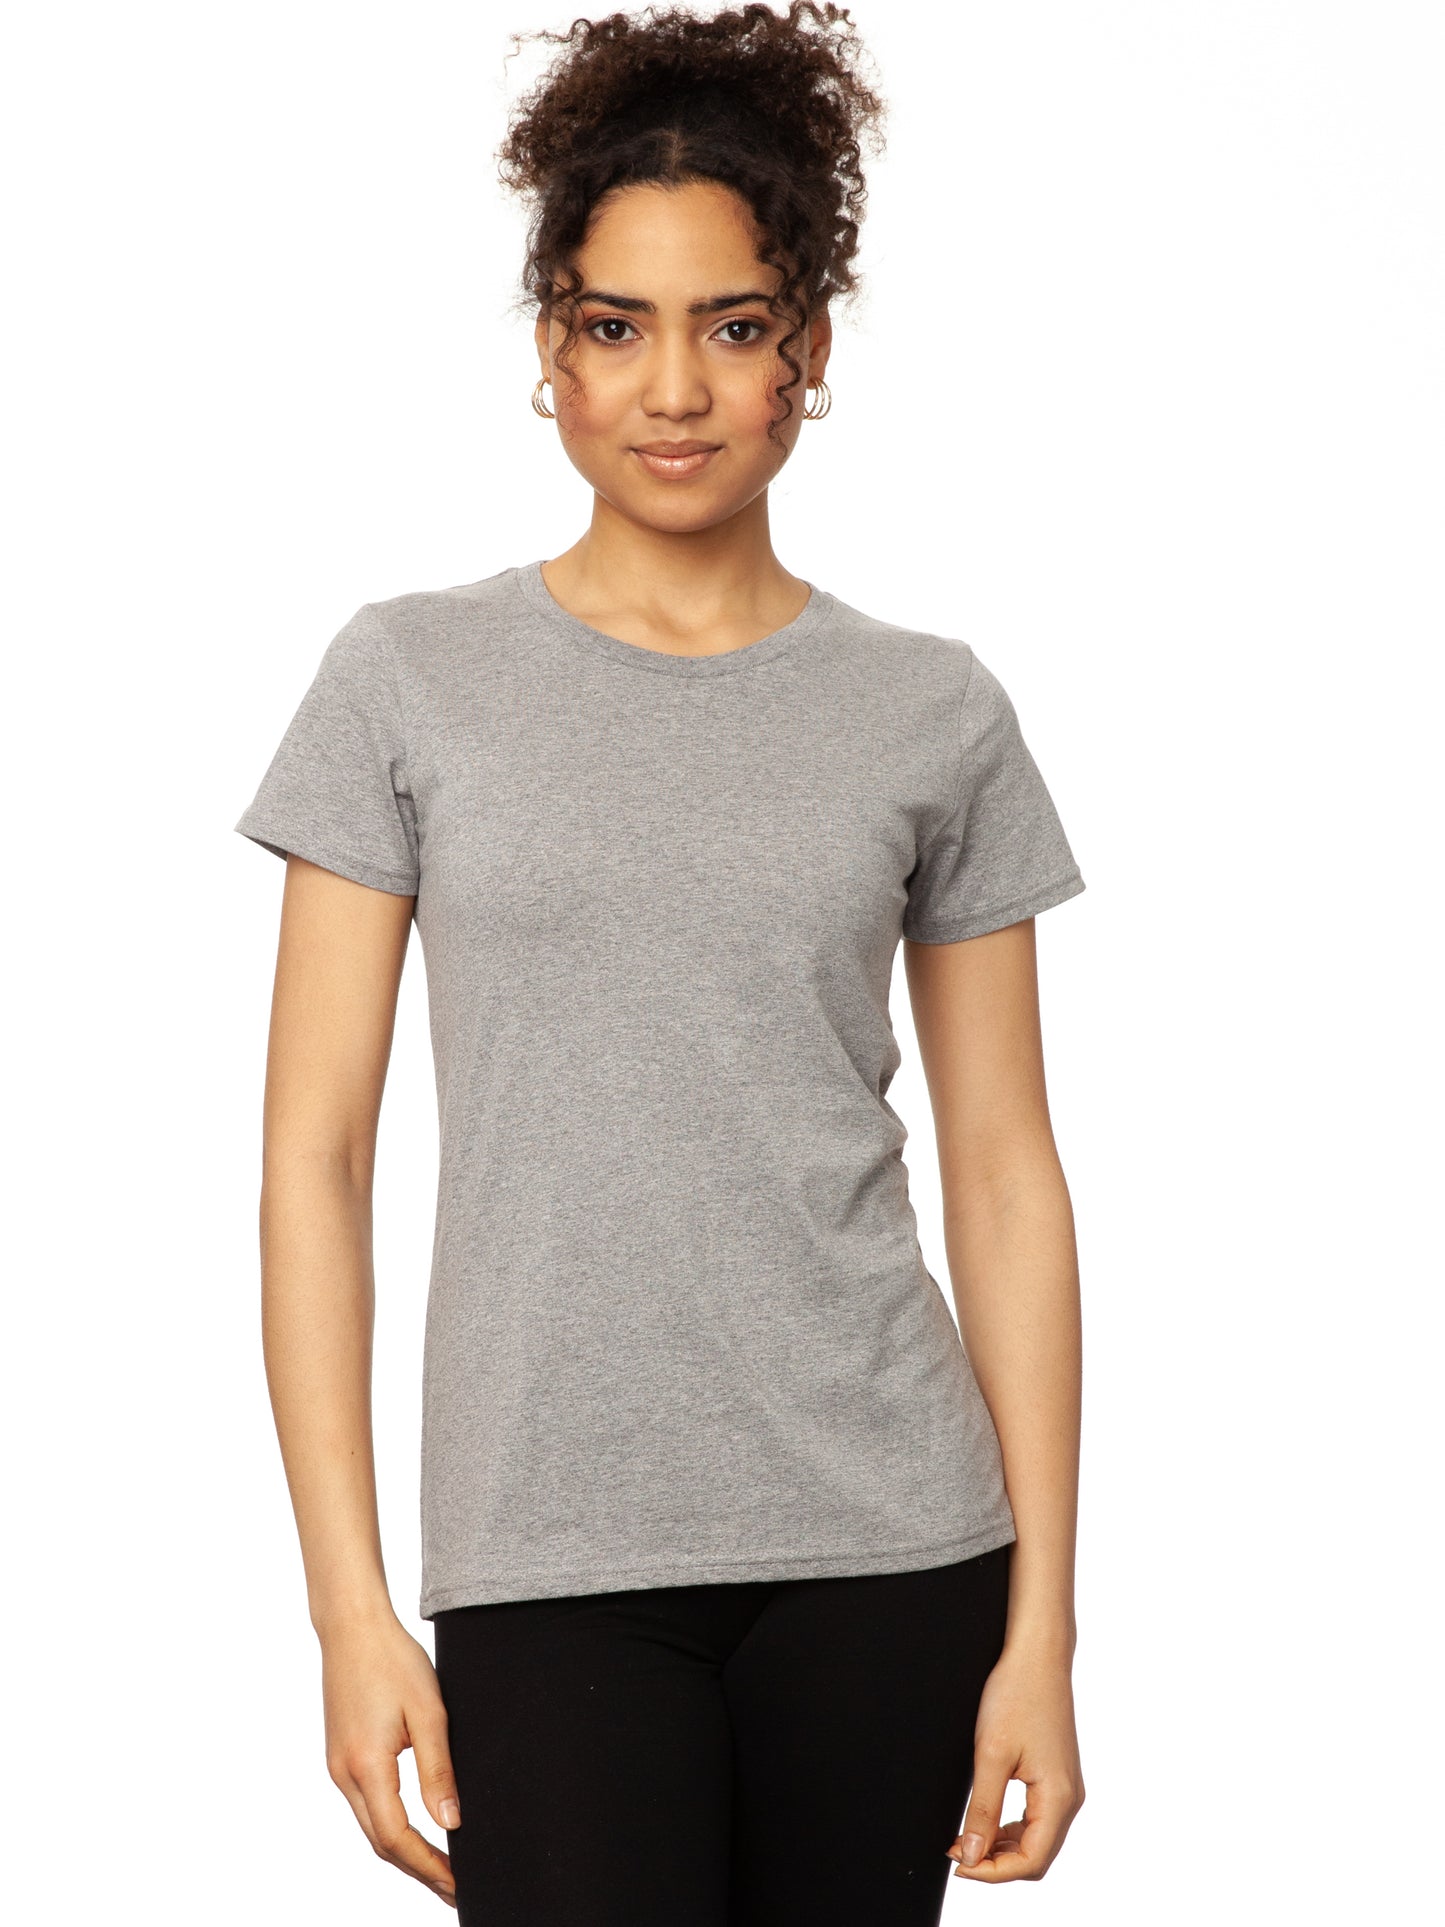 T-Shirt melange grey